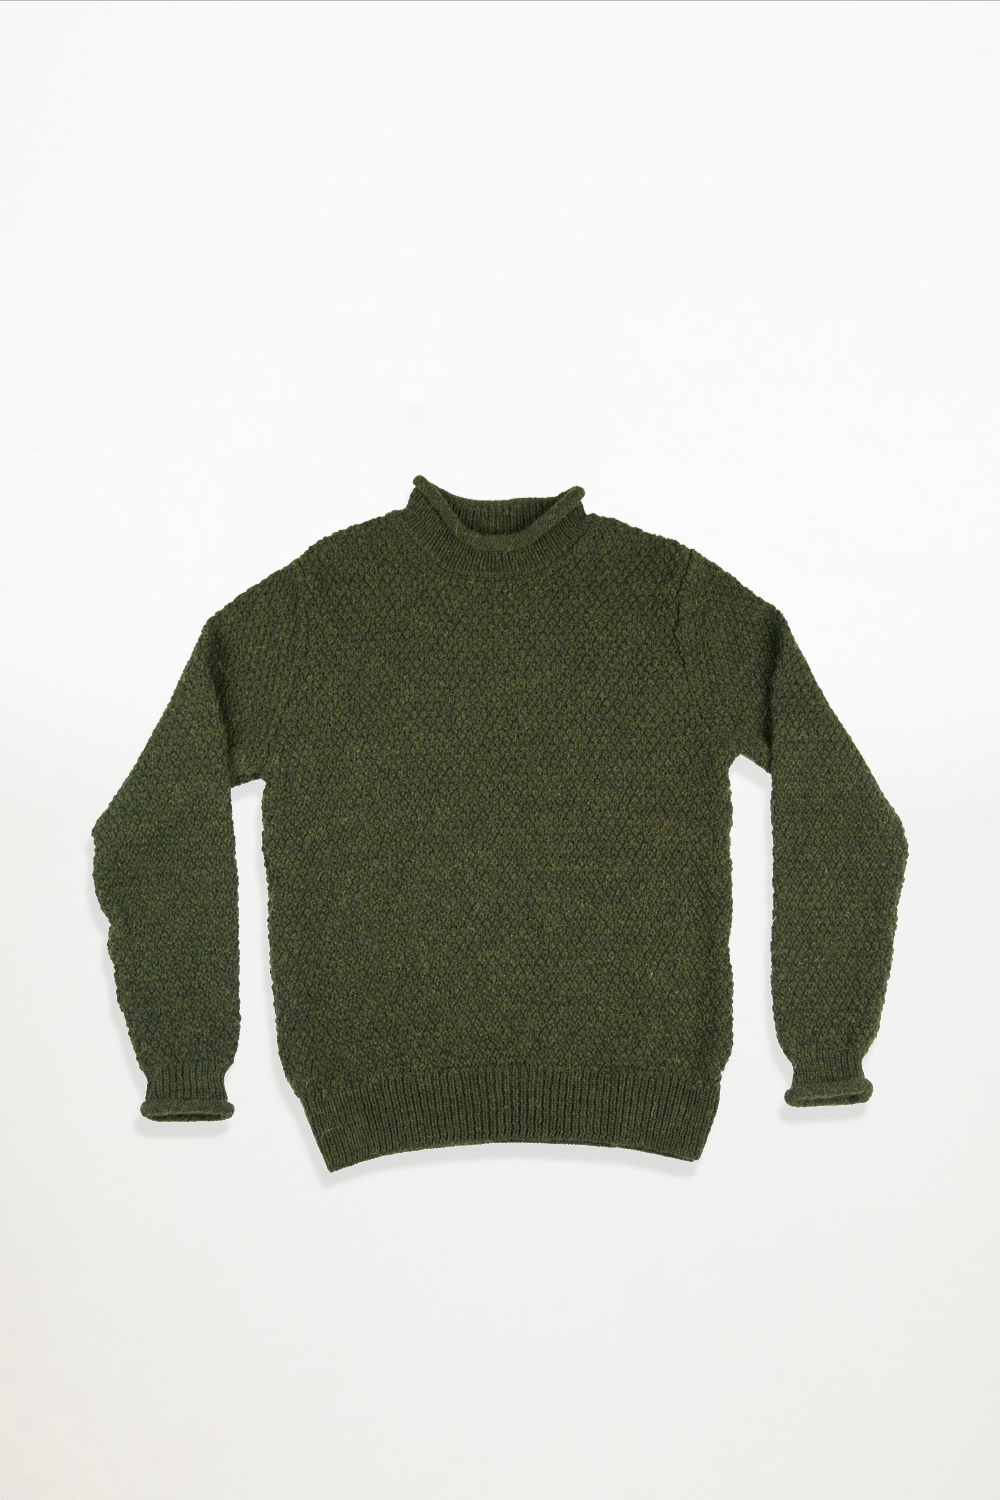 Mars Knitwear - British Wool Moss Stitch Roll Neck - Loden - Ensemble Studios